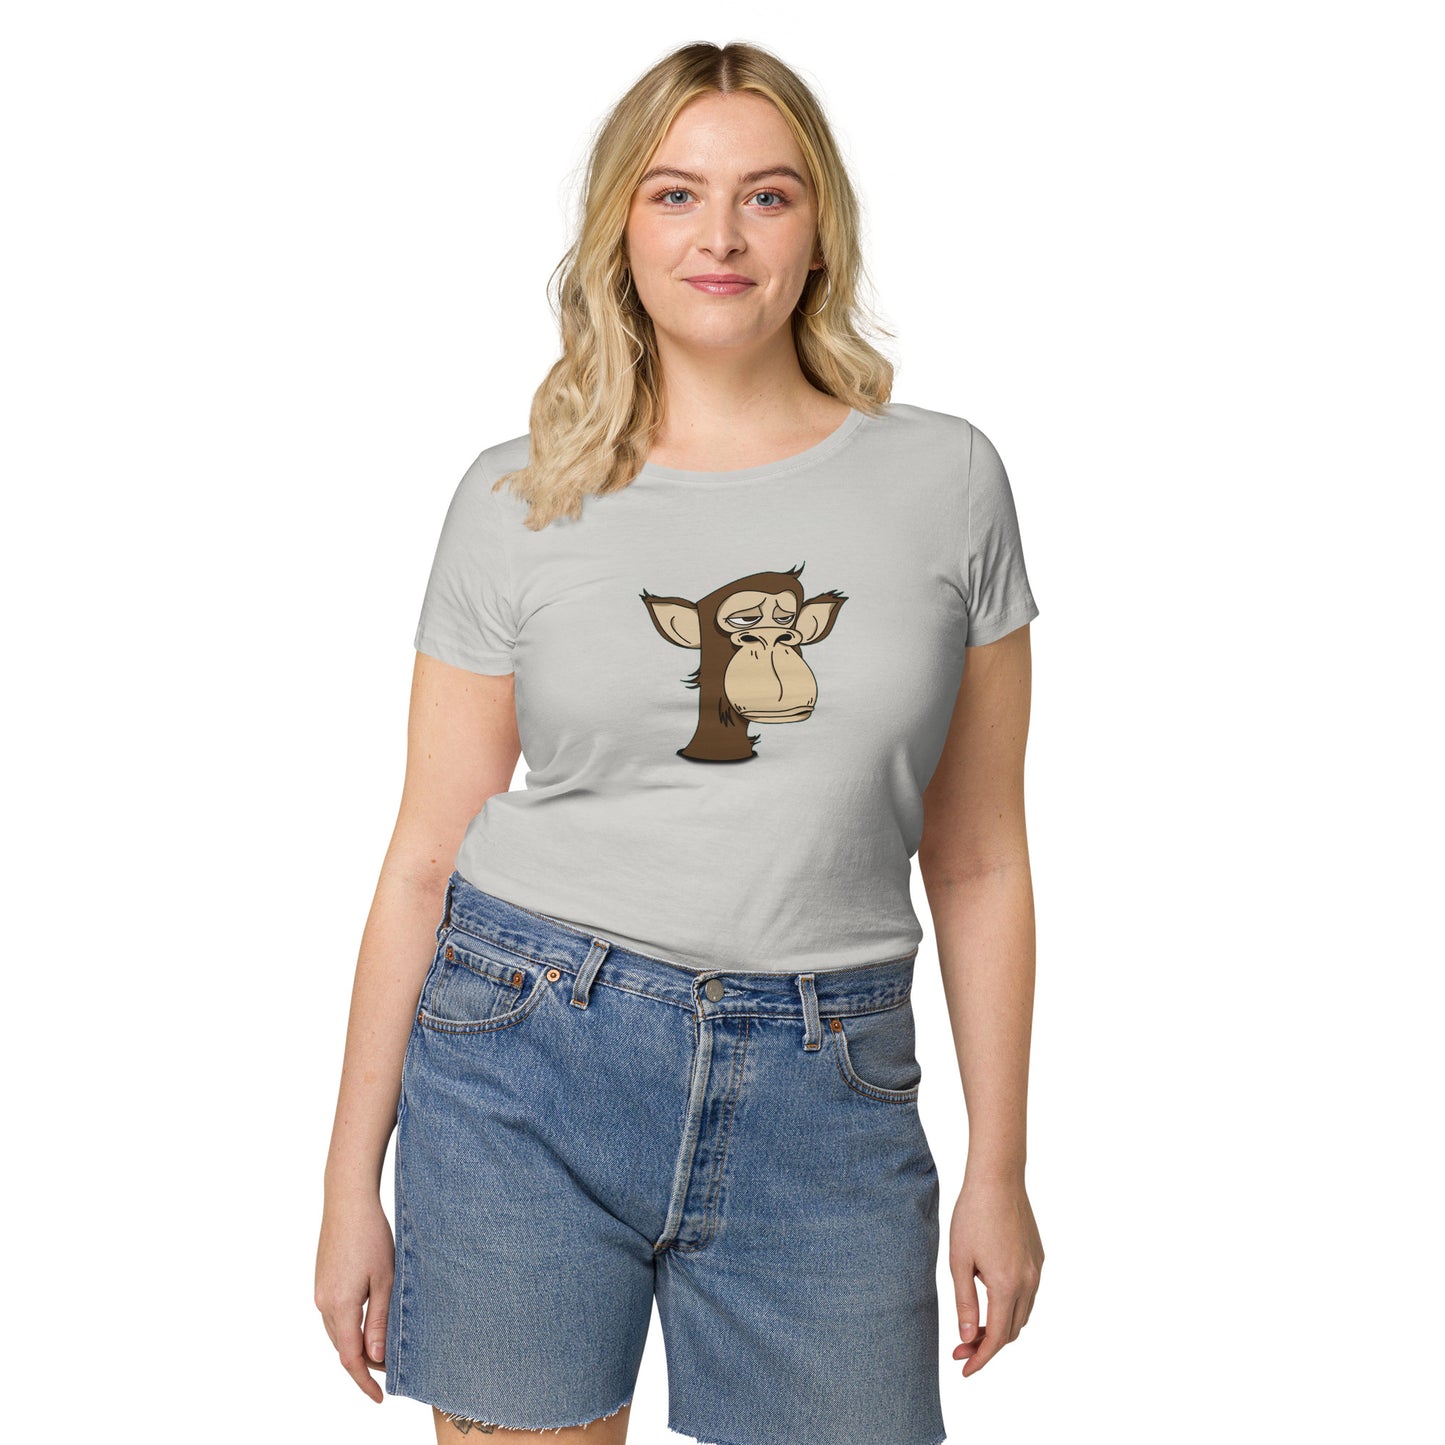 Women’s basic organic t-shirt feat Polygon Ape YC #6437